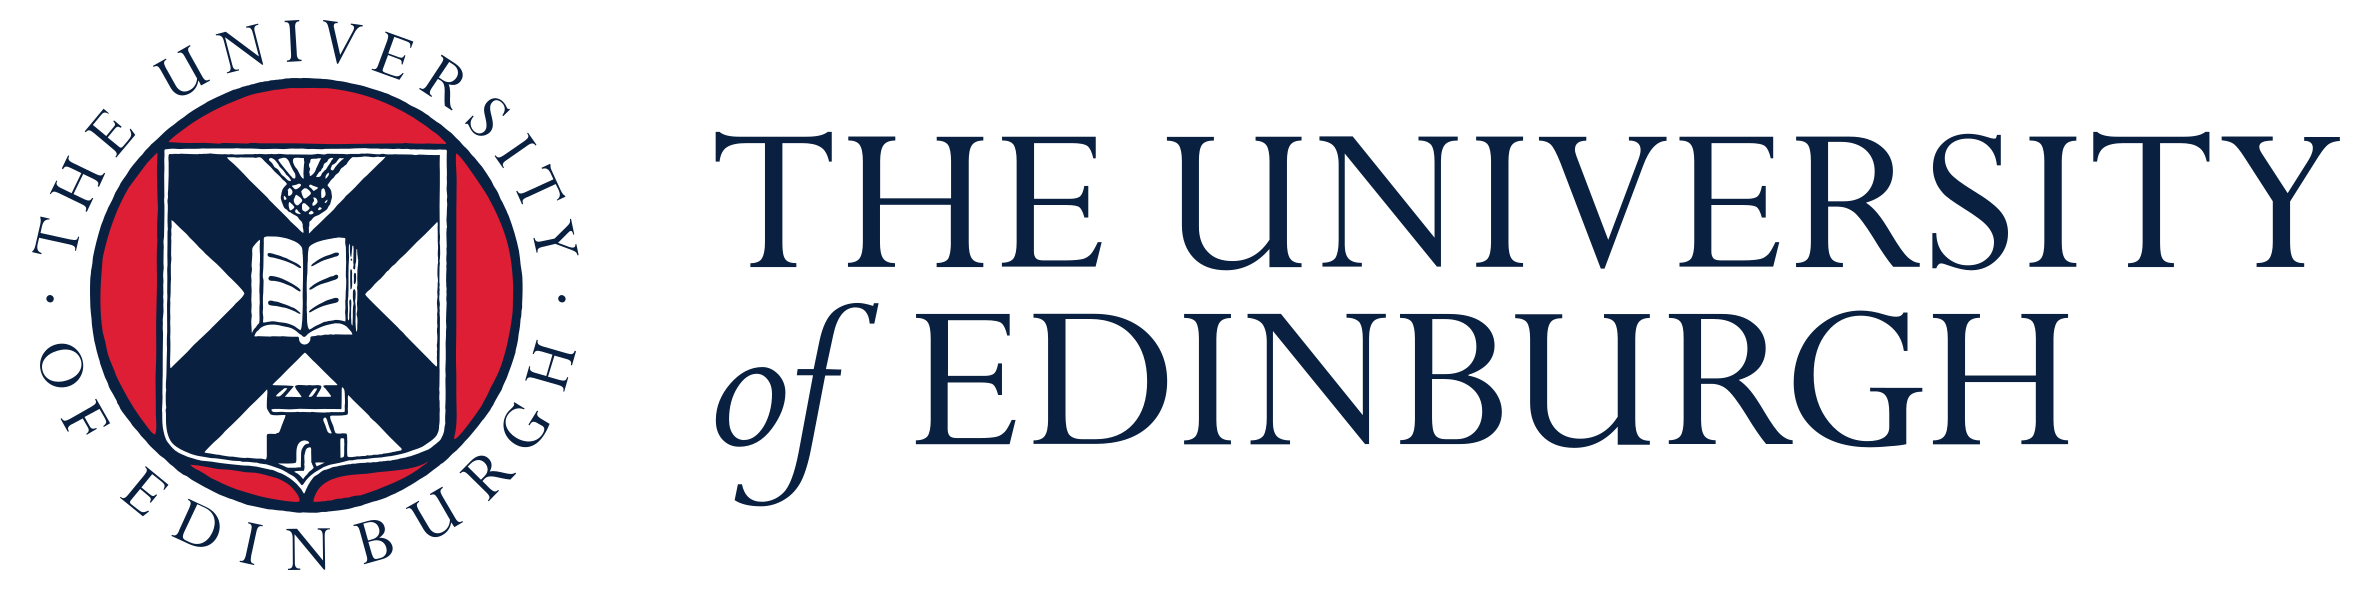 University_of_Edinburgh-Logo-2.png